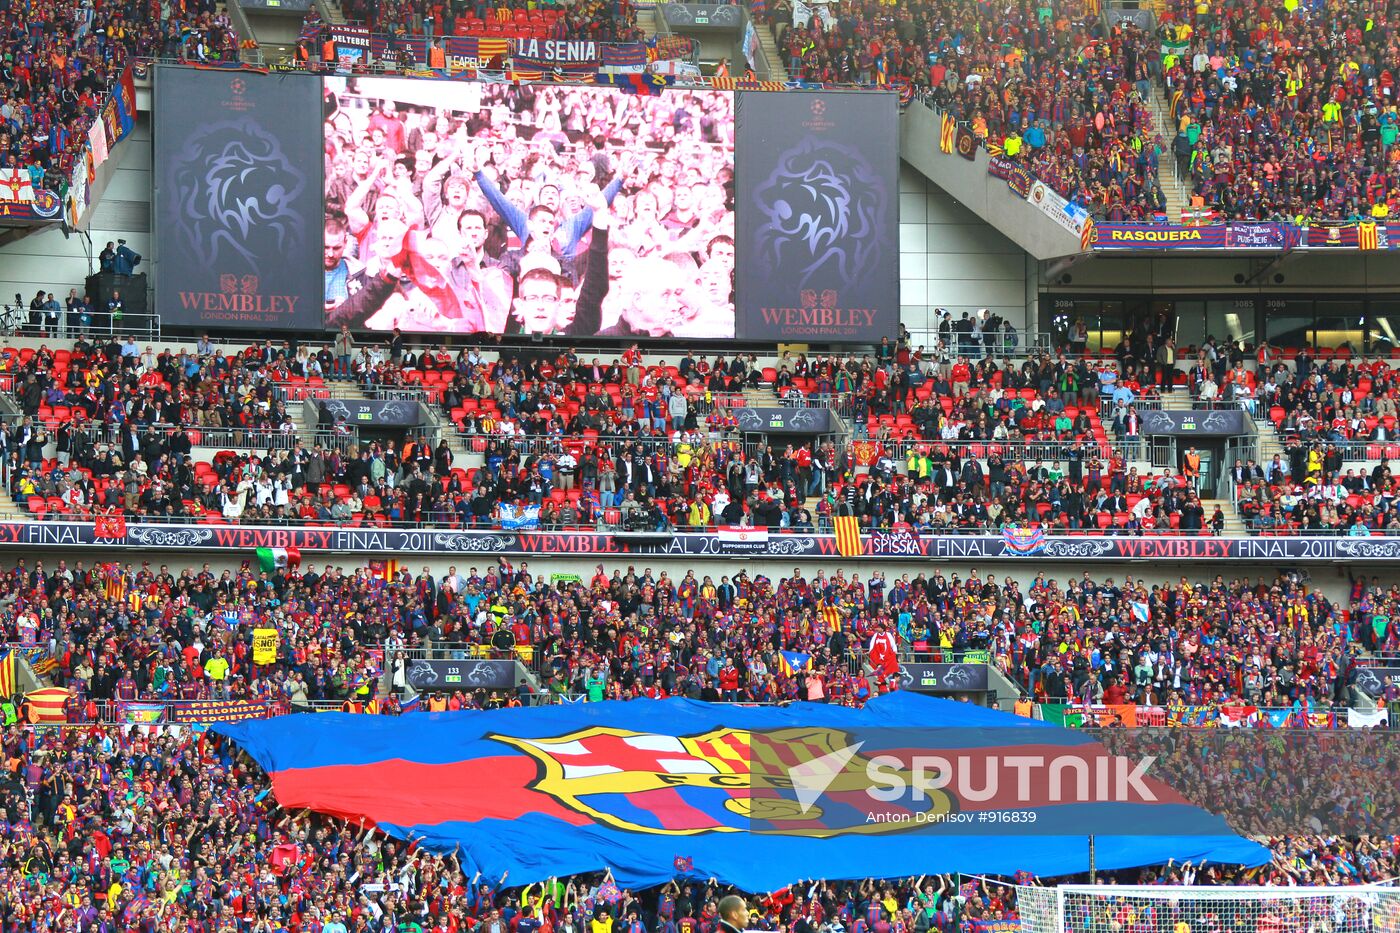 UEFA Champions League Final. Manchester United vs. Barcelona